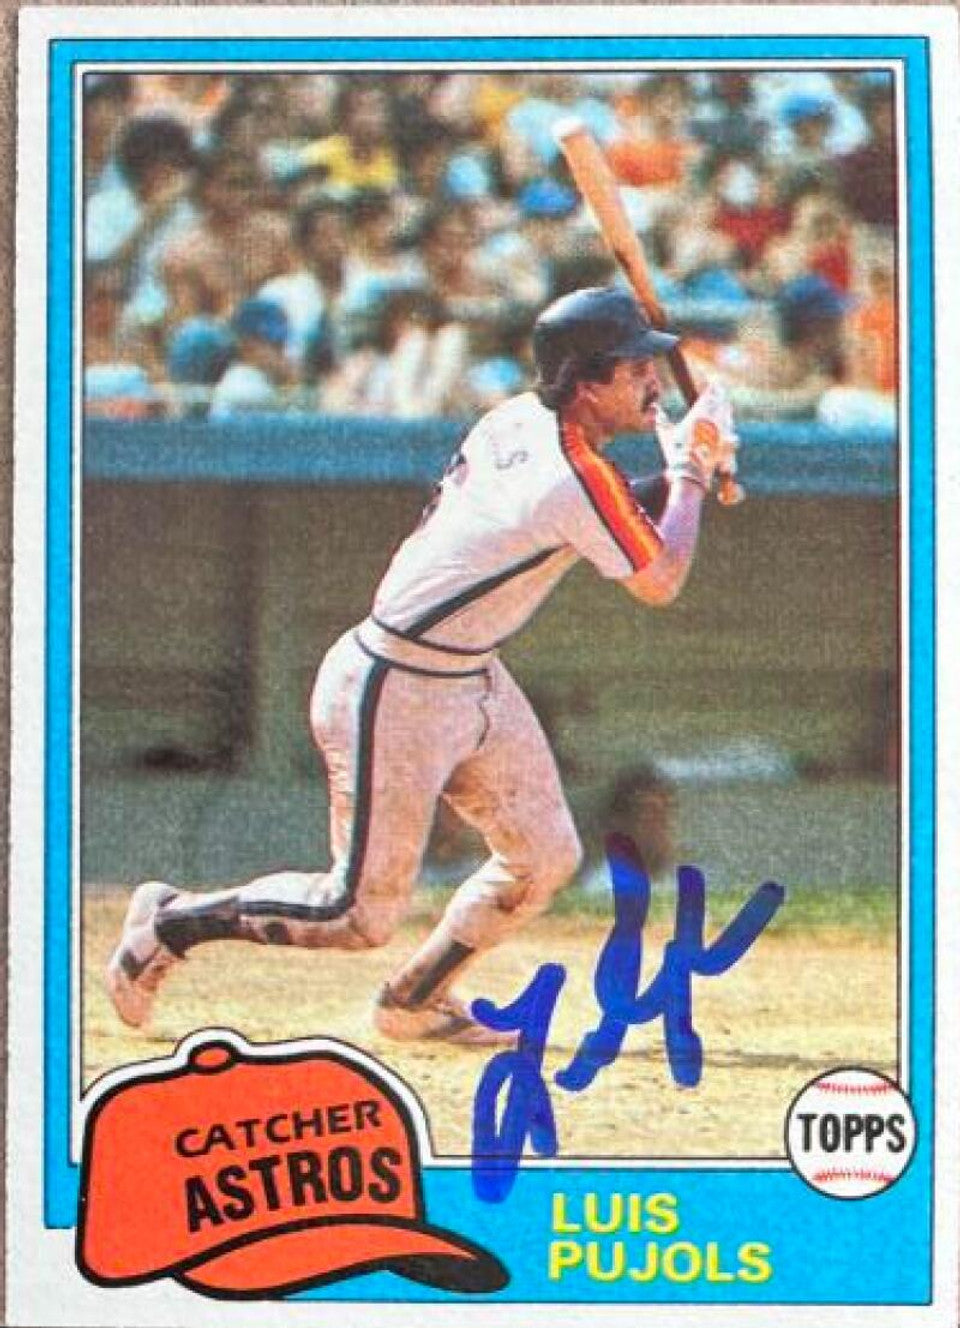 Luis Pujols Signed 1981 Topps Baseball Card - Houston Astros